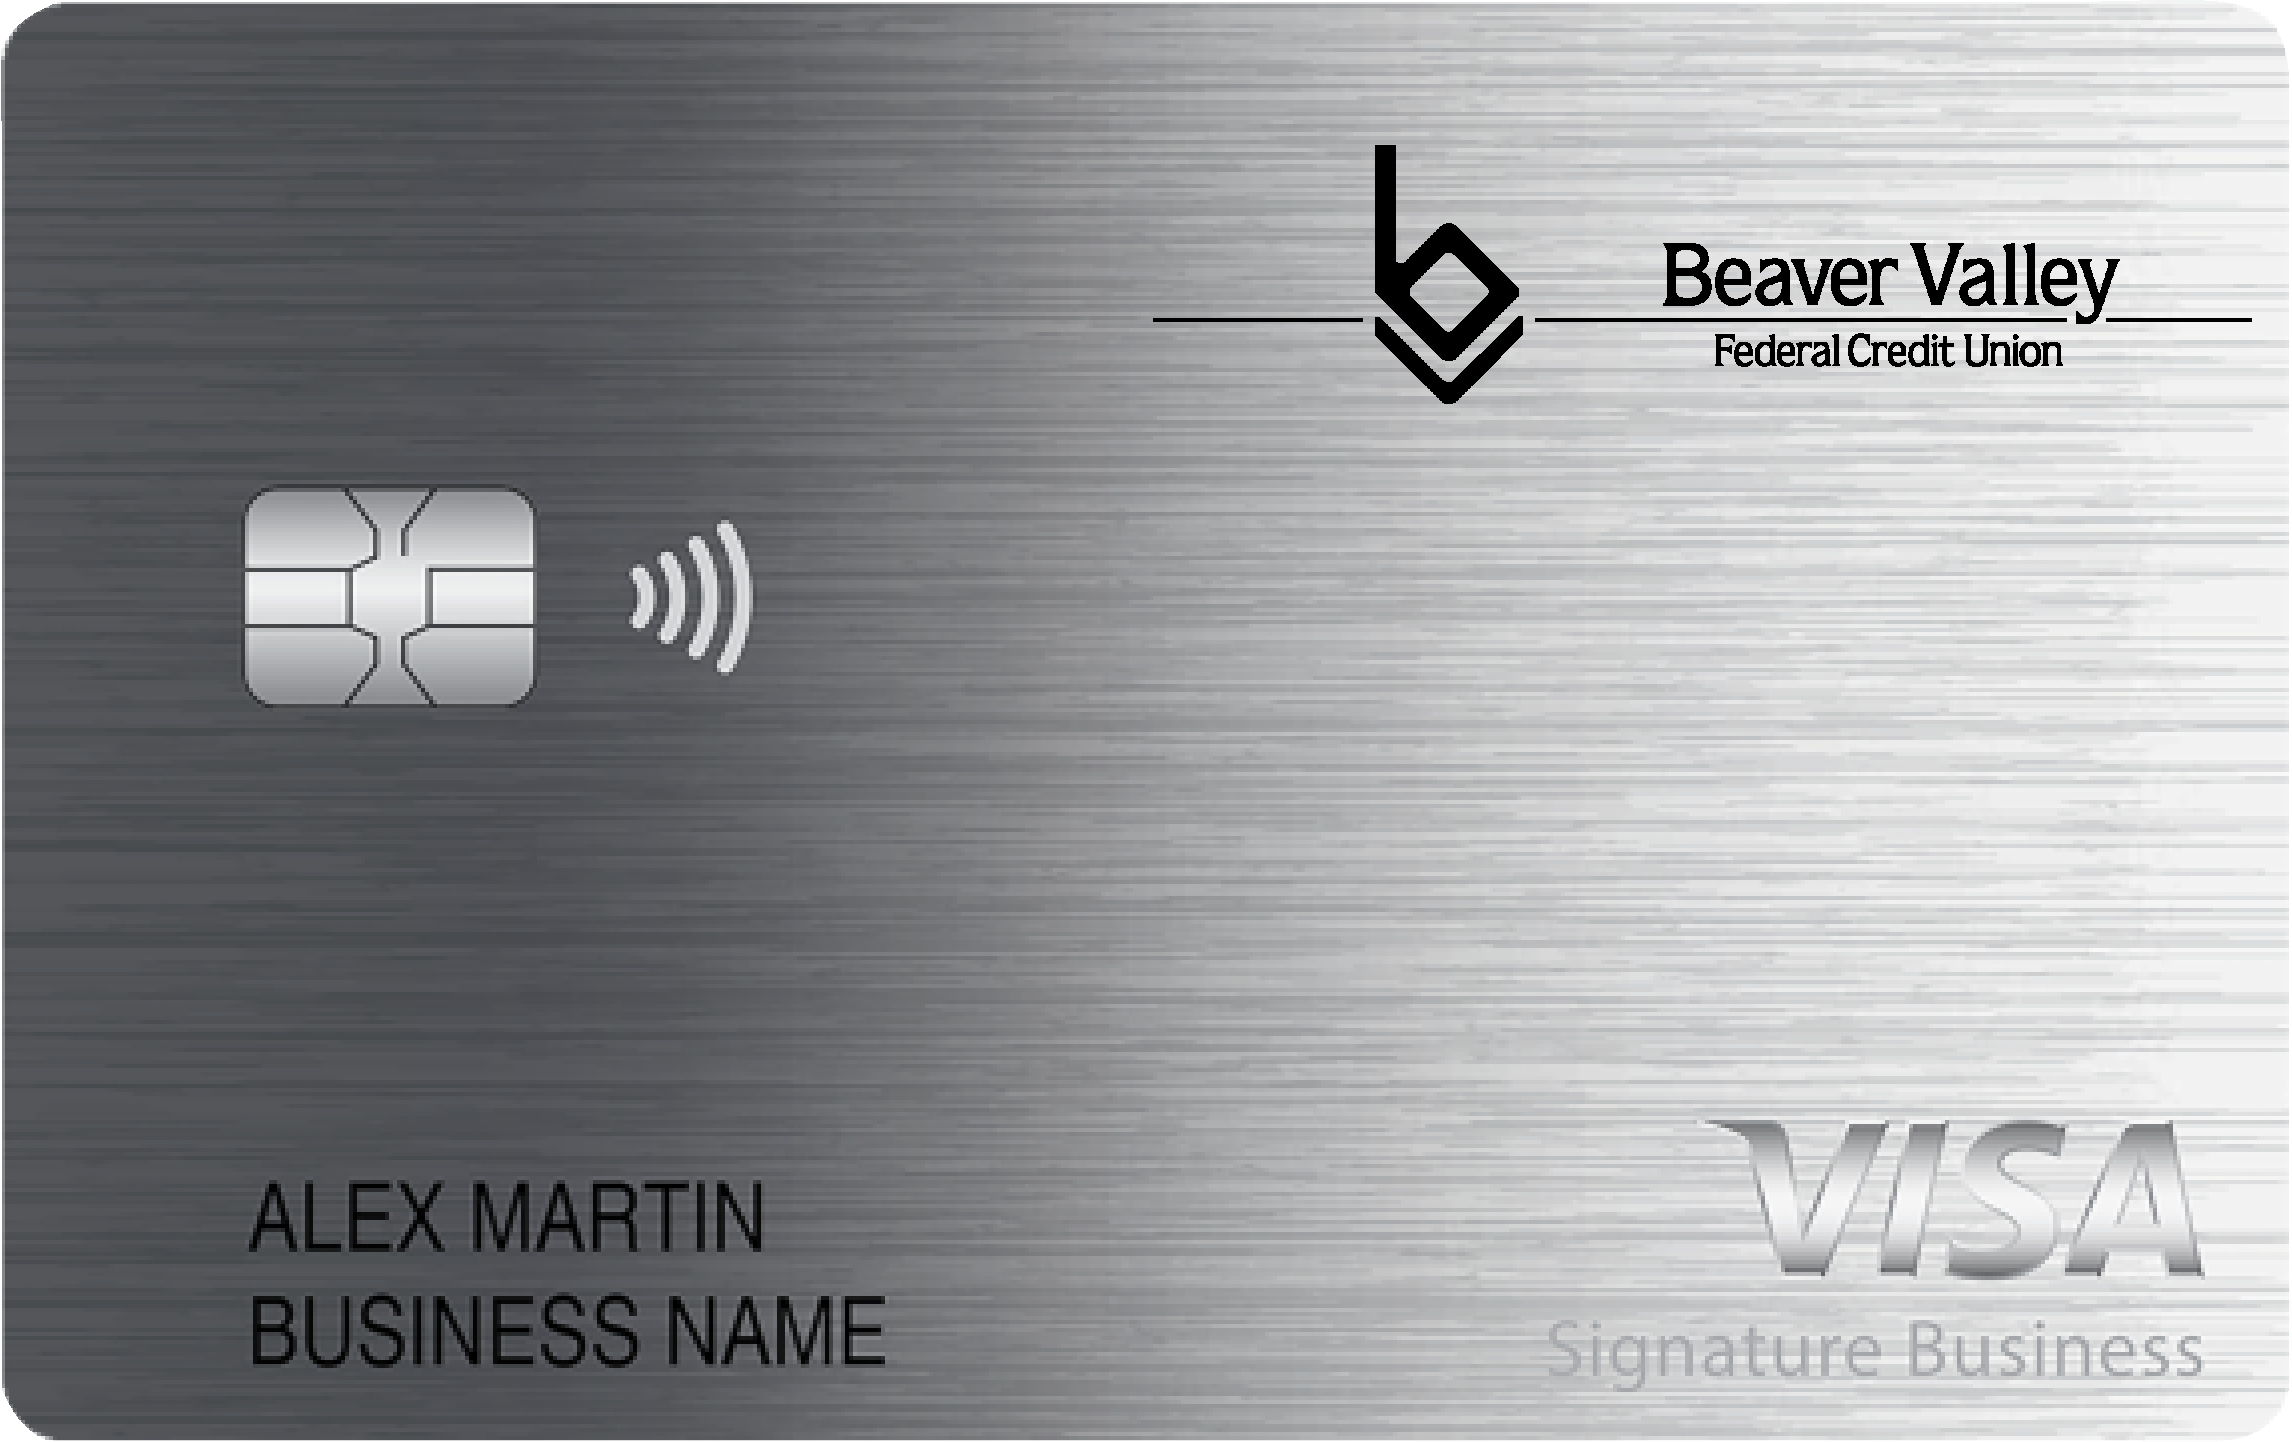 Beaver Valley FCU Smart Business Rewards Card